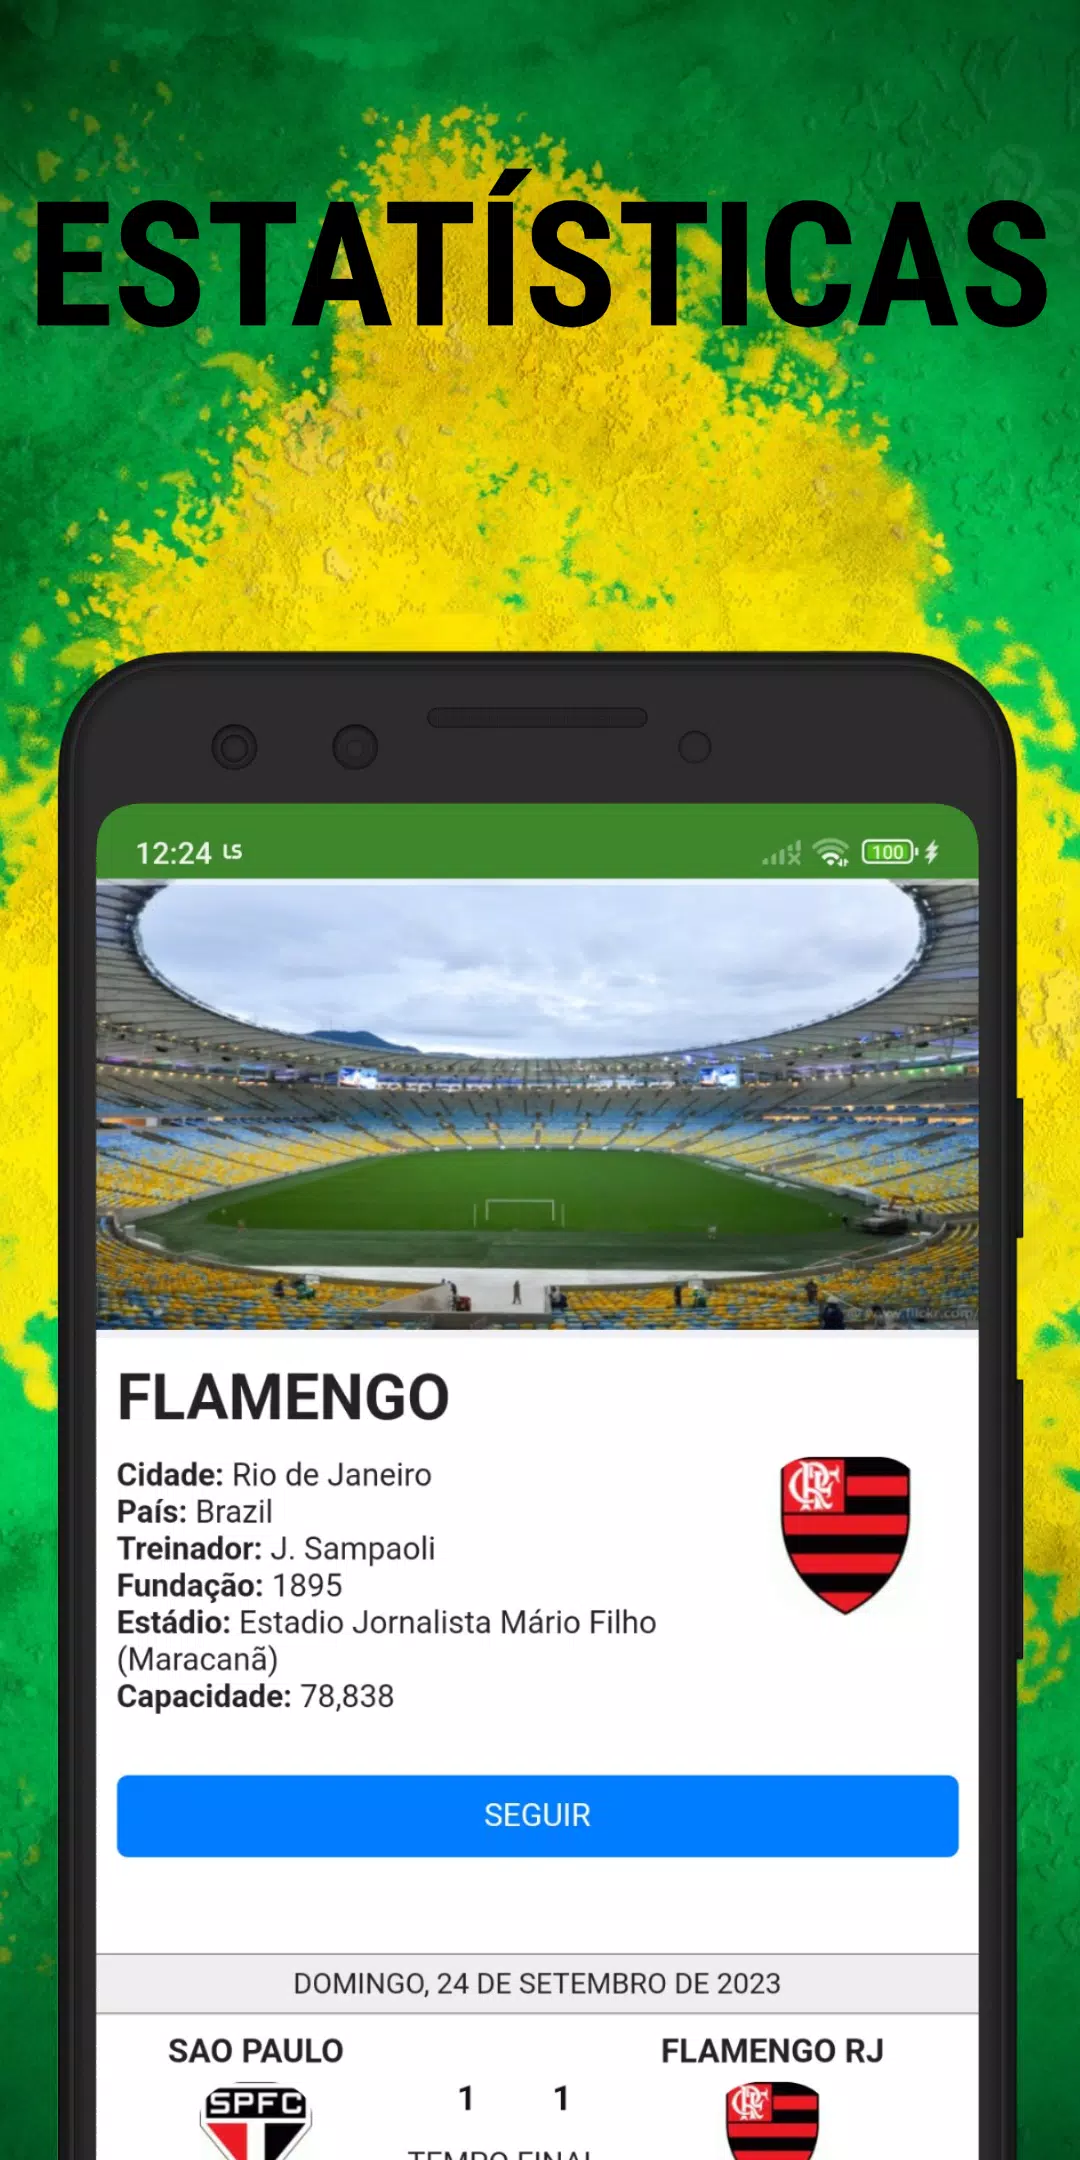 Futebol Ao Vivo - Brasileirão APK للاندرويد تنزيل